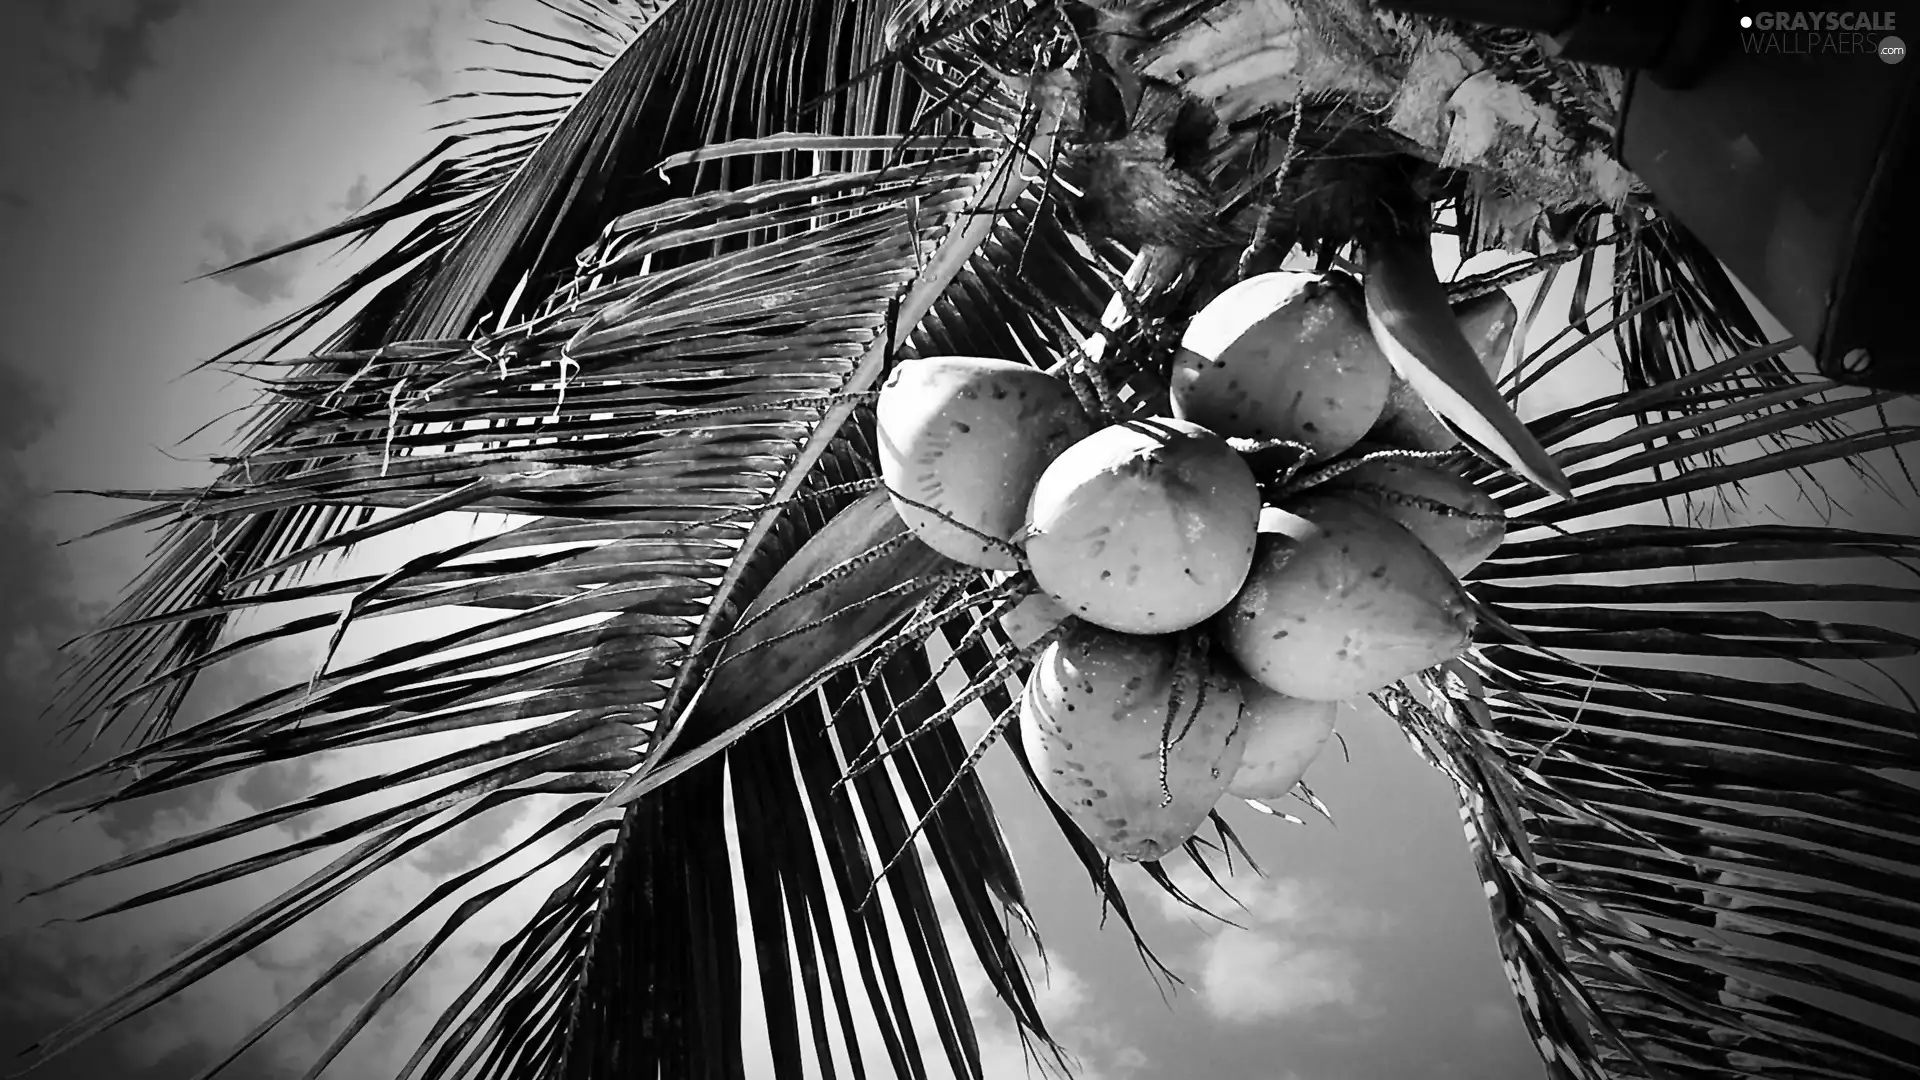 Palm, coconuts